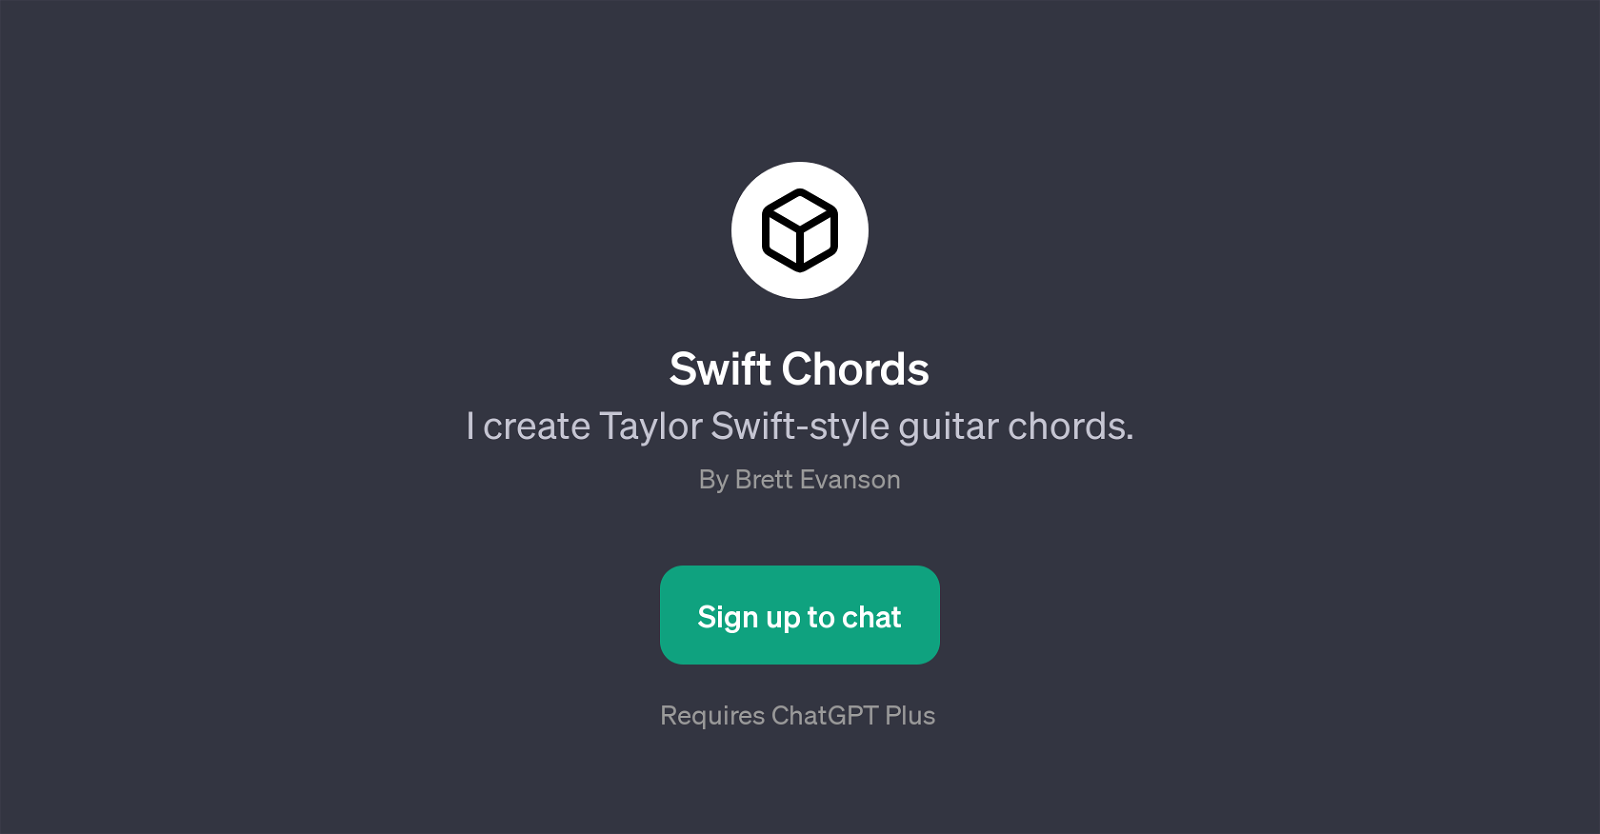 Swift Chords website